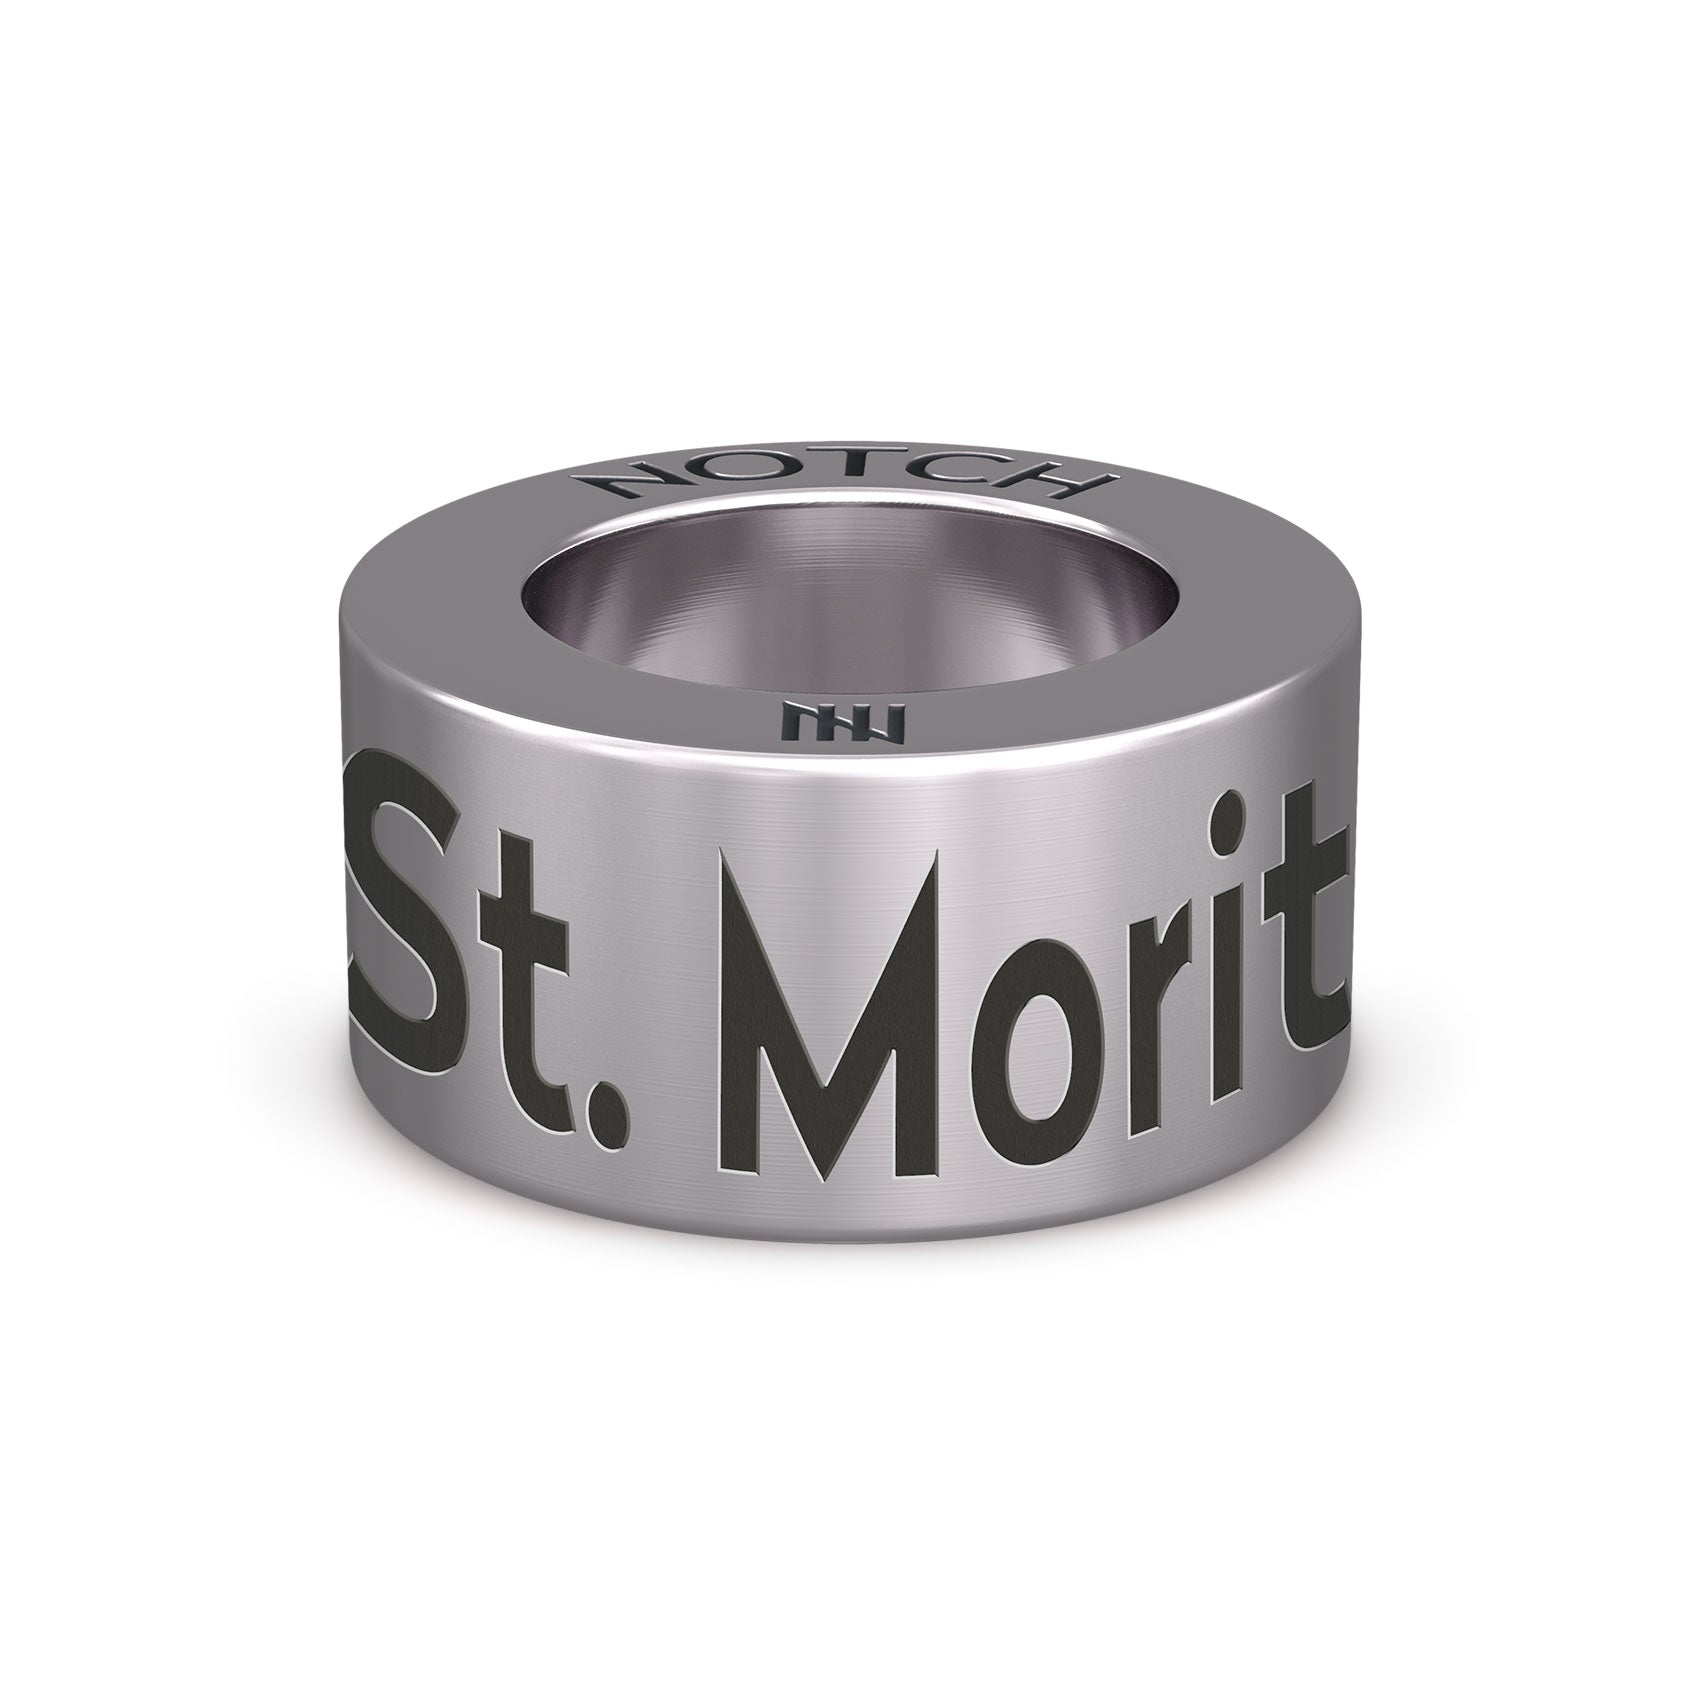 St. Moritz NOTCH Charm